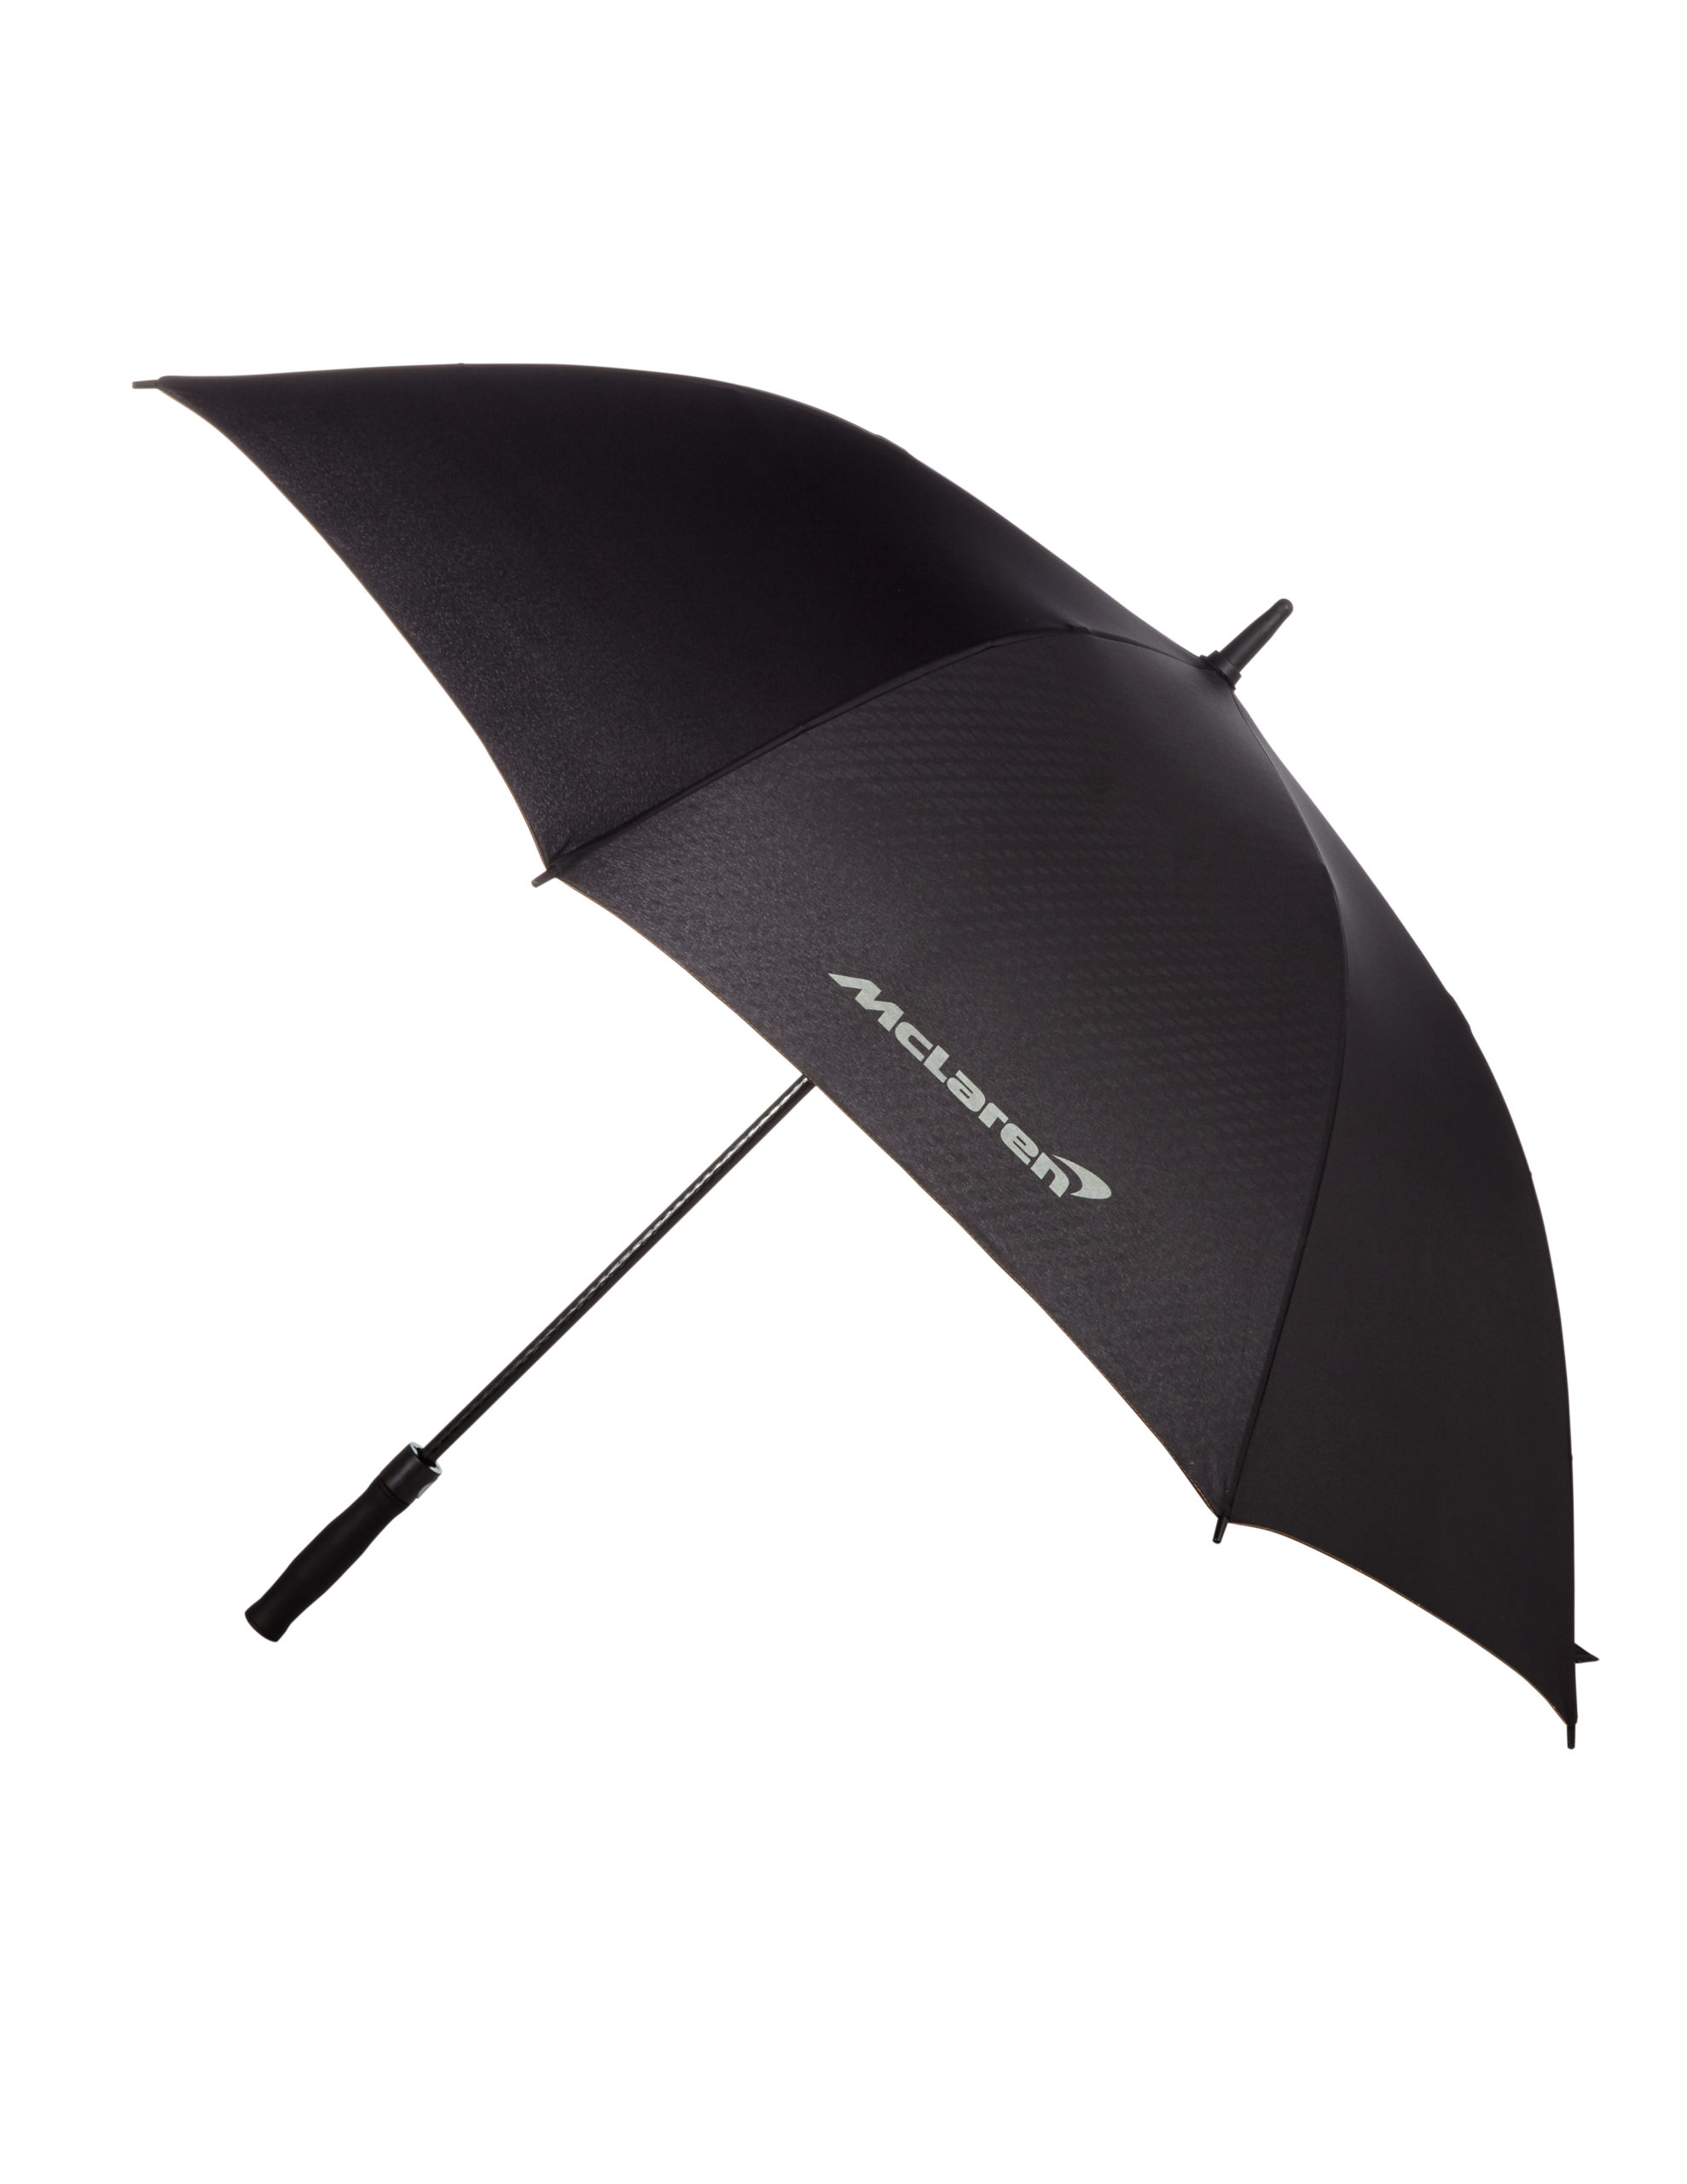 McLaren Golf Umbrella for sale at McLaren North Jersey